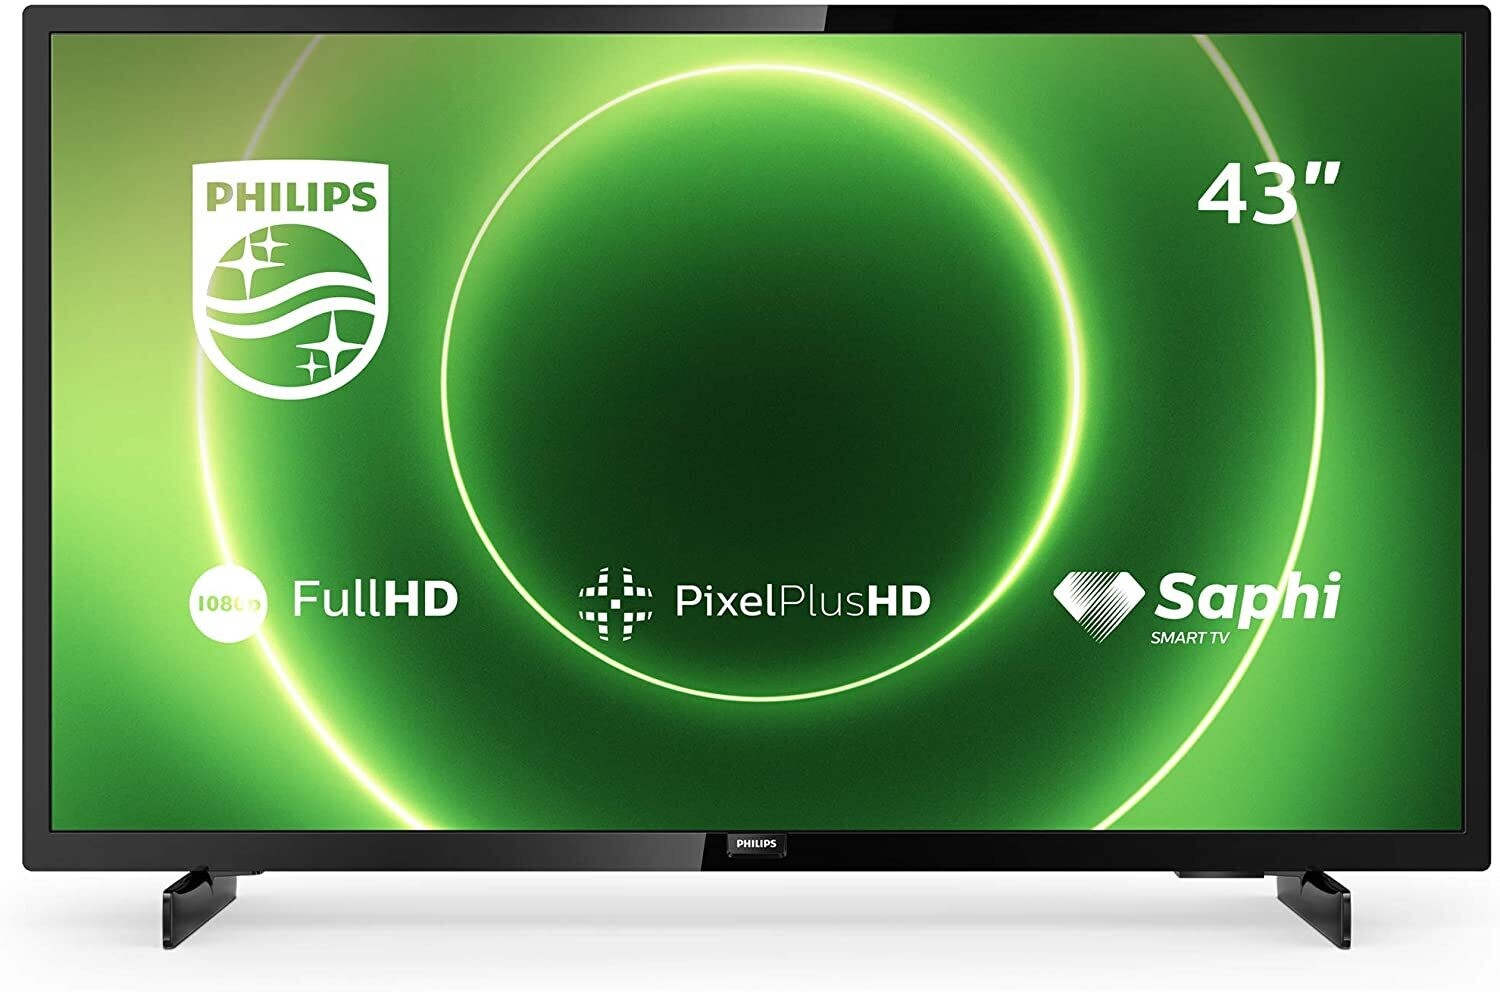 Televisor smart TV Philips 6800 Series 43PFD6825/77 LED Full HD